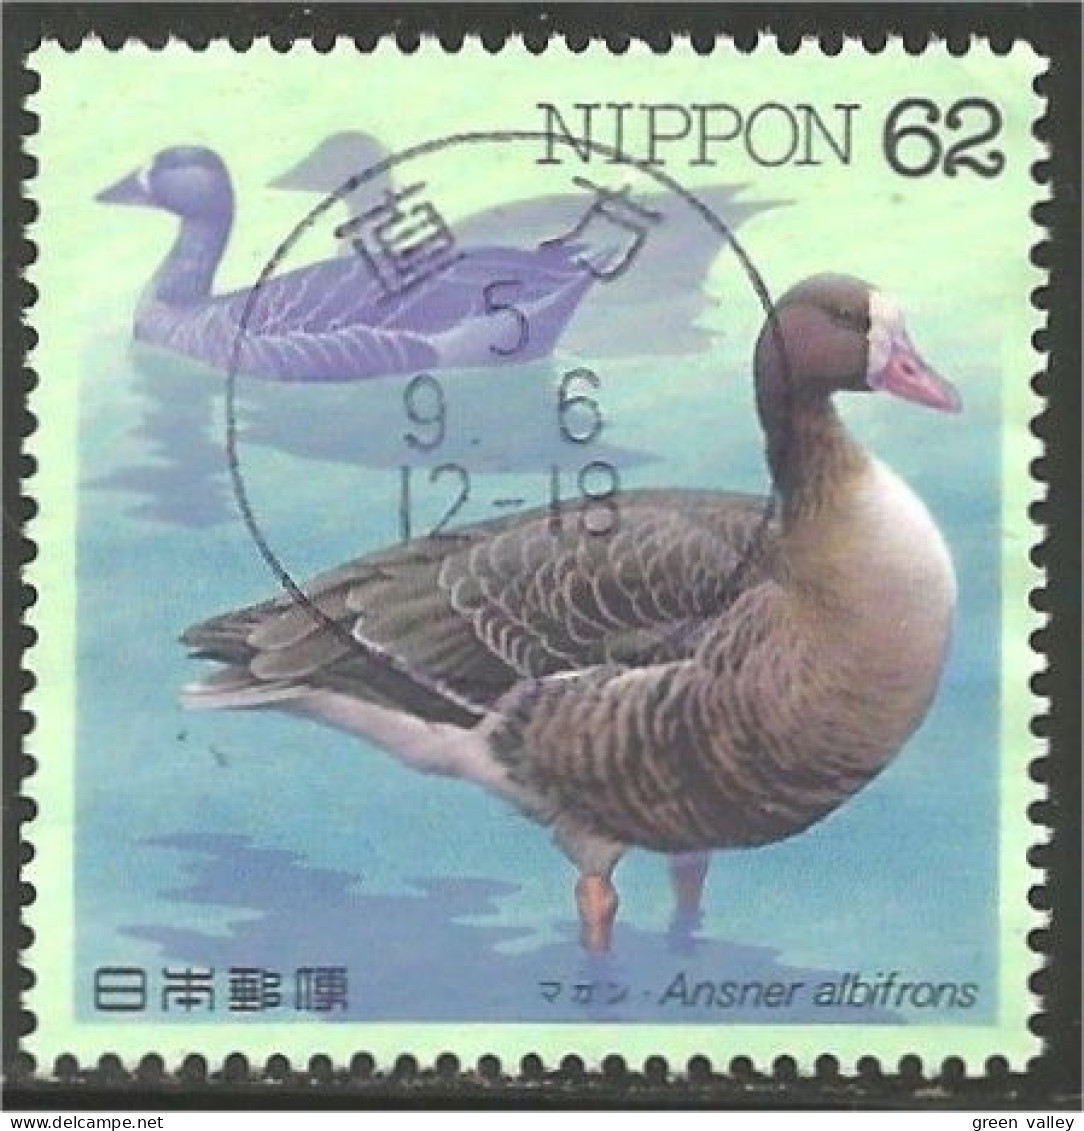 JAP-461 Japon Oie Goose Geese Gans Oca Ganso - Gansos